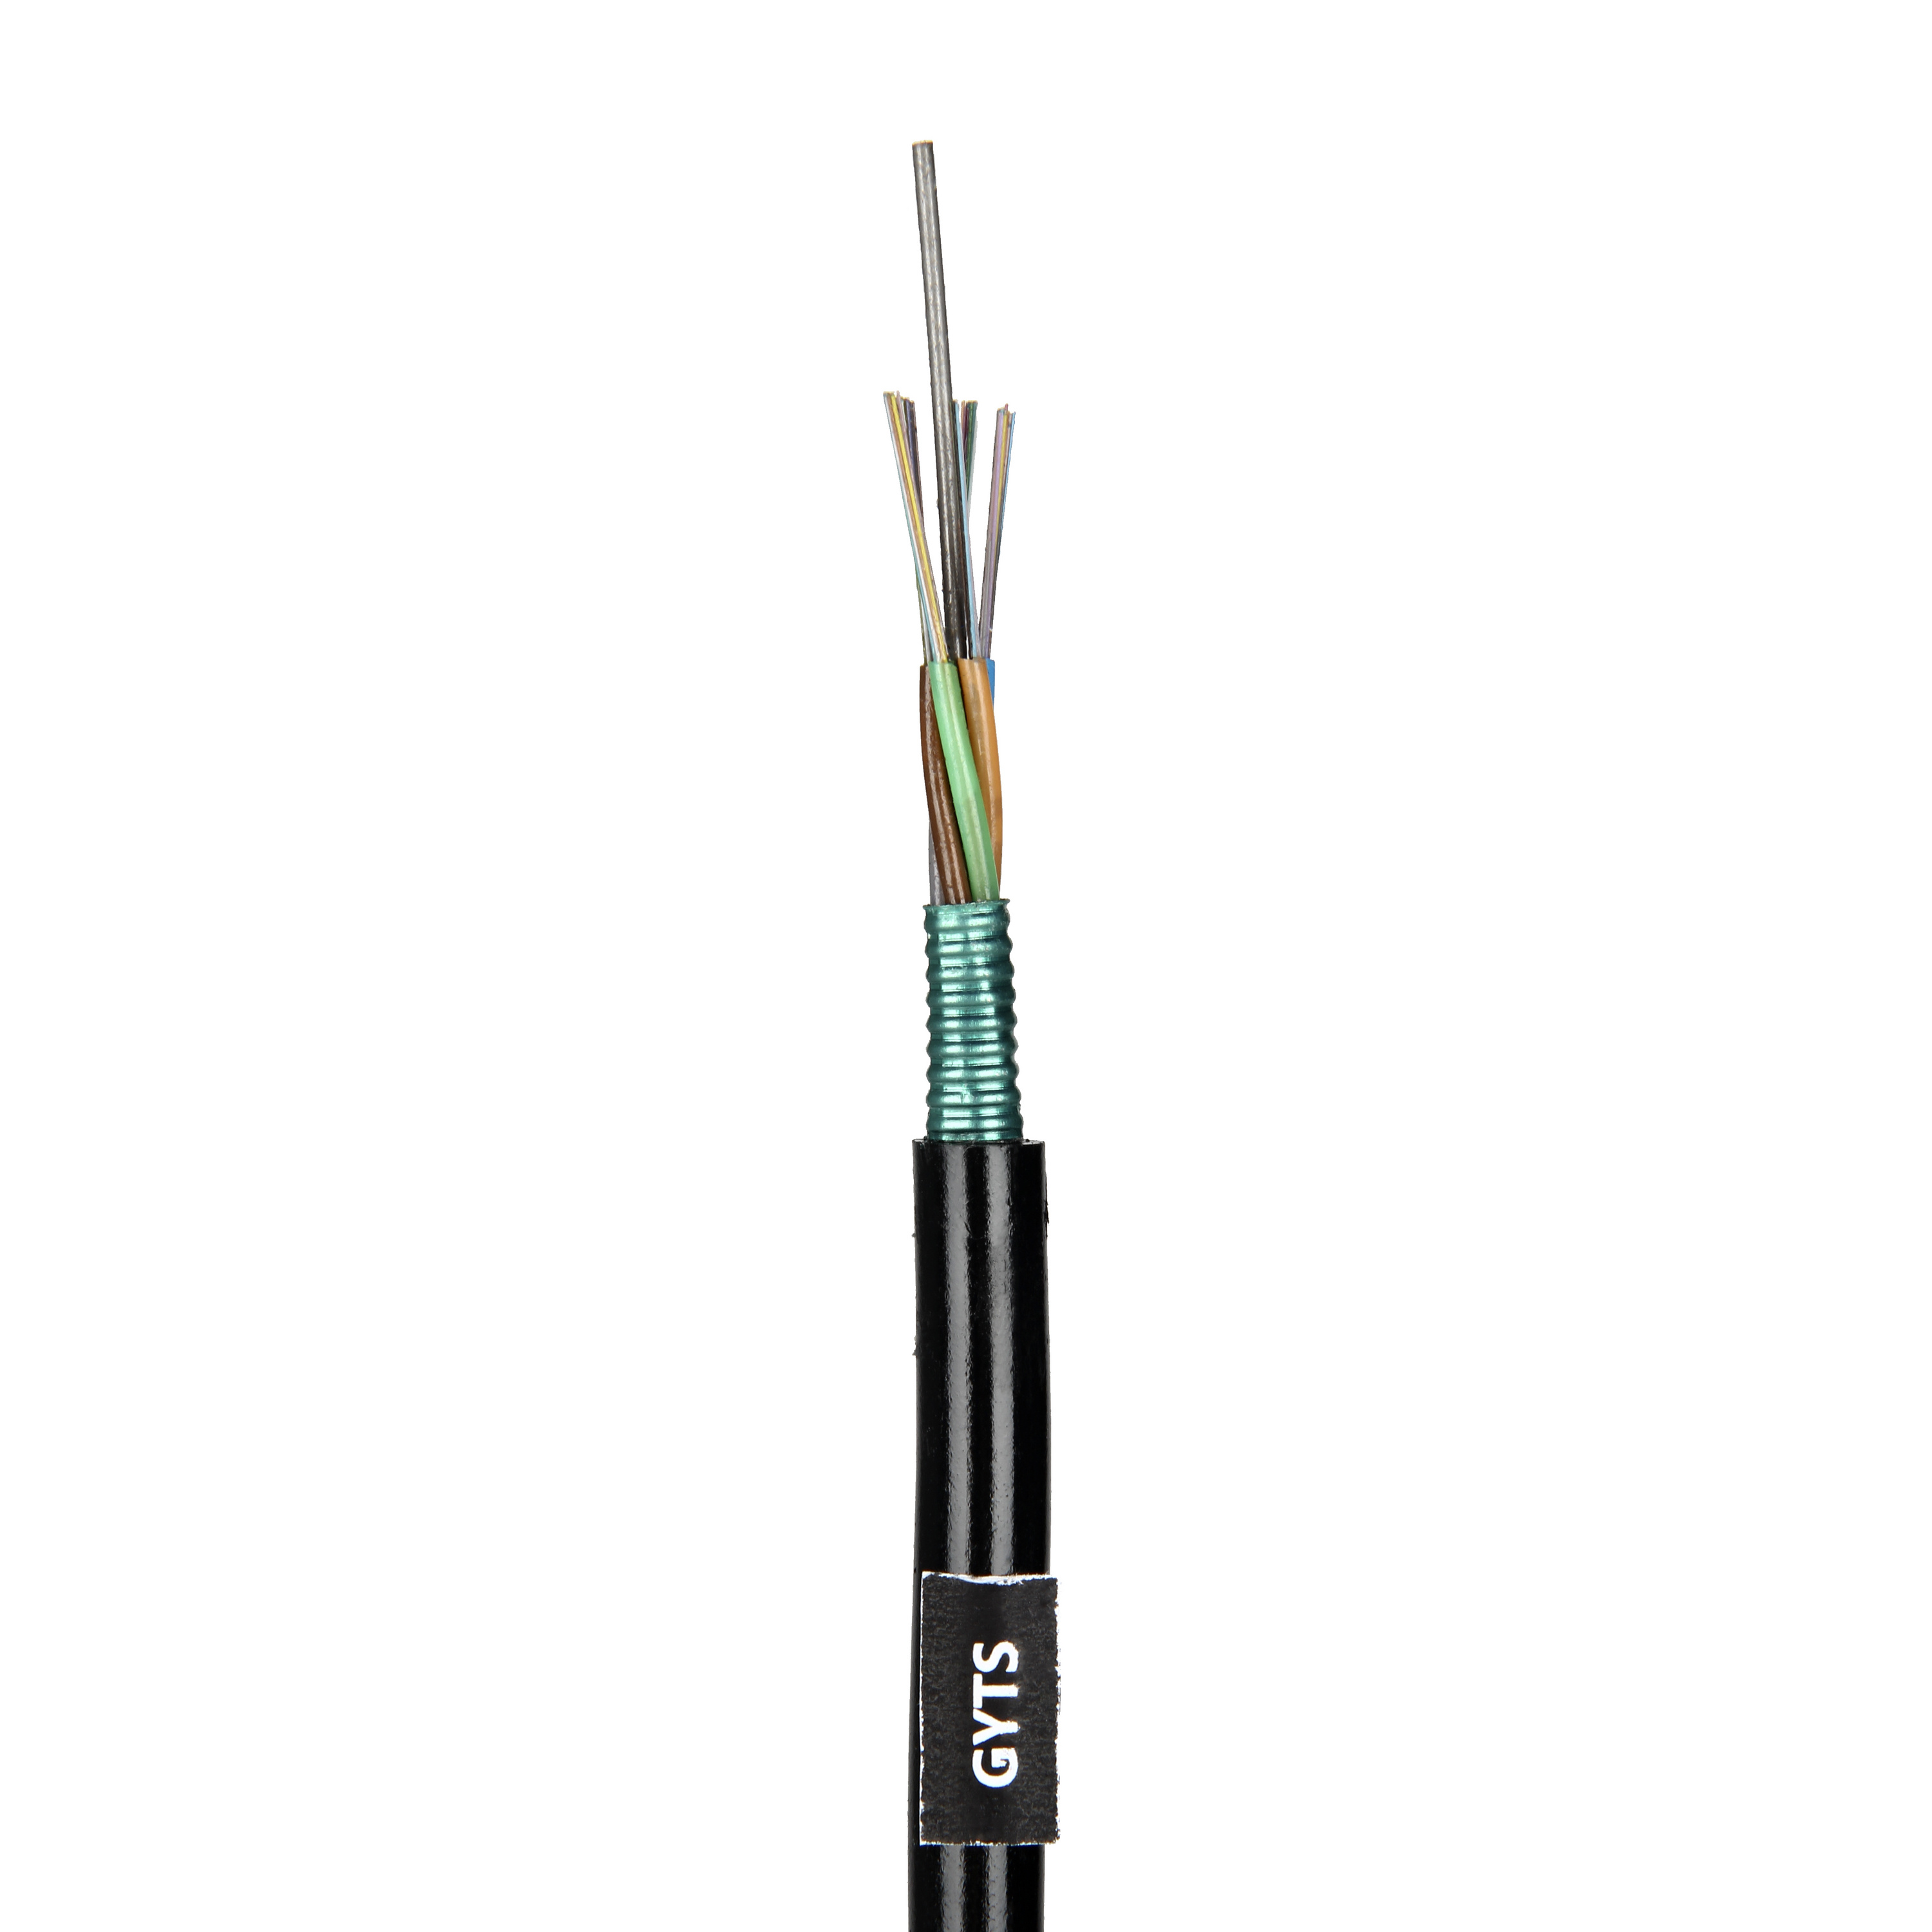 GYTS Duct Underground Aerial 48 Core Fiber Optic Cable Price Per Meter